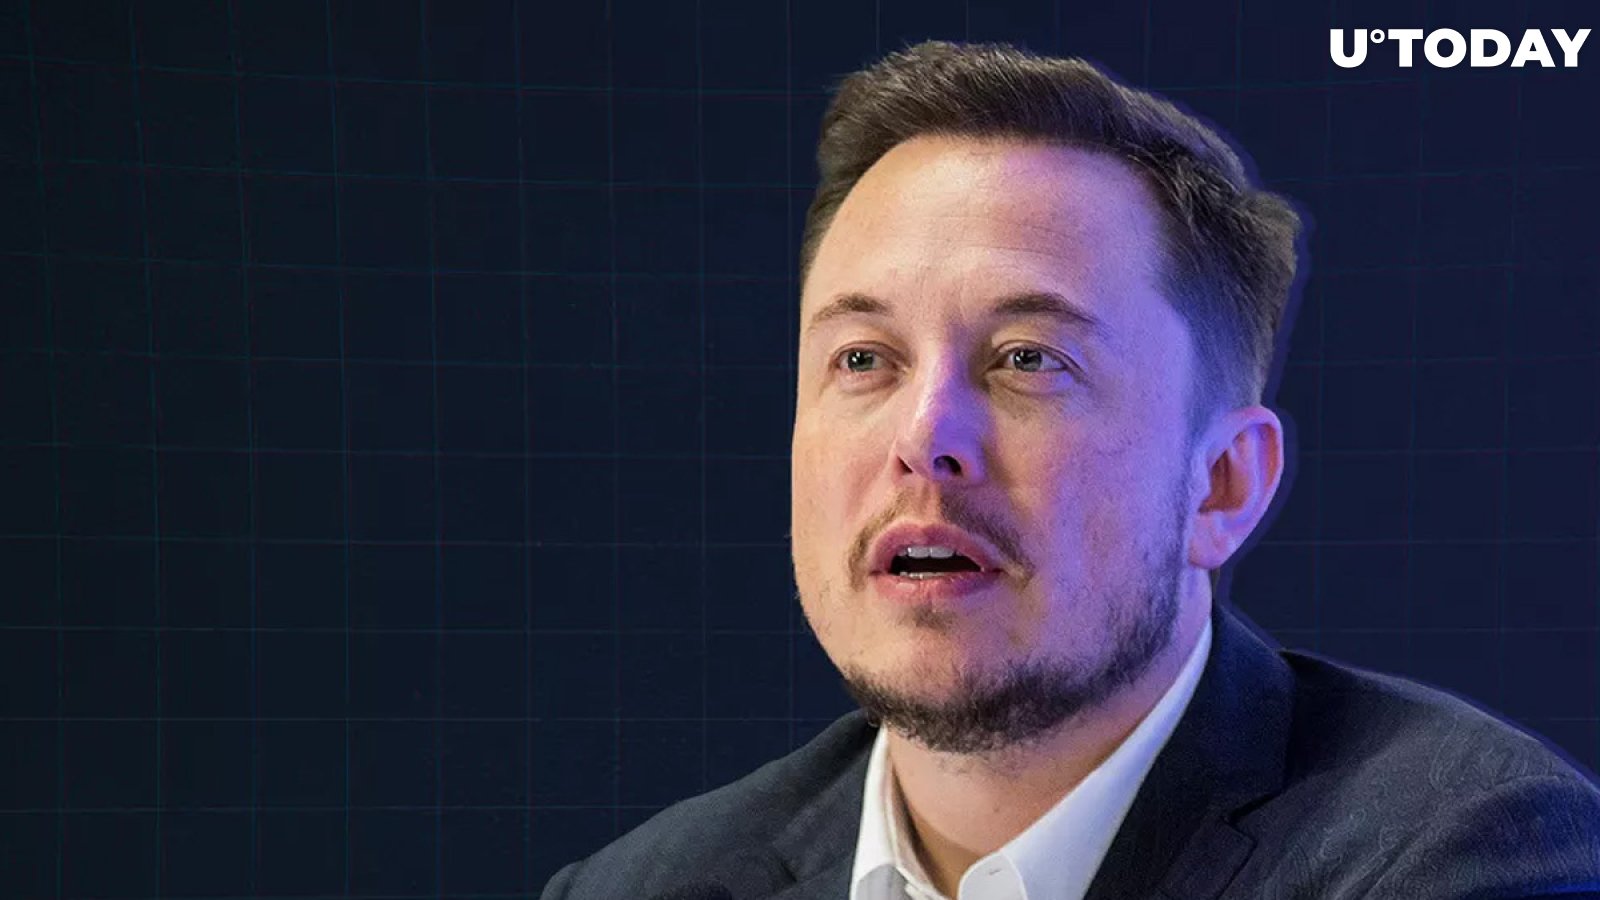 Elon Musk Denies There’s Bitcoin ATM at Tesla’s Gigafactory